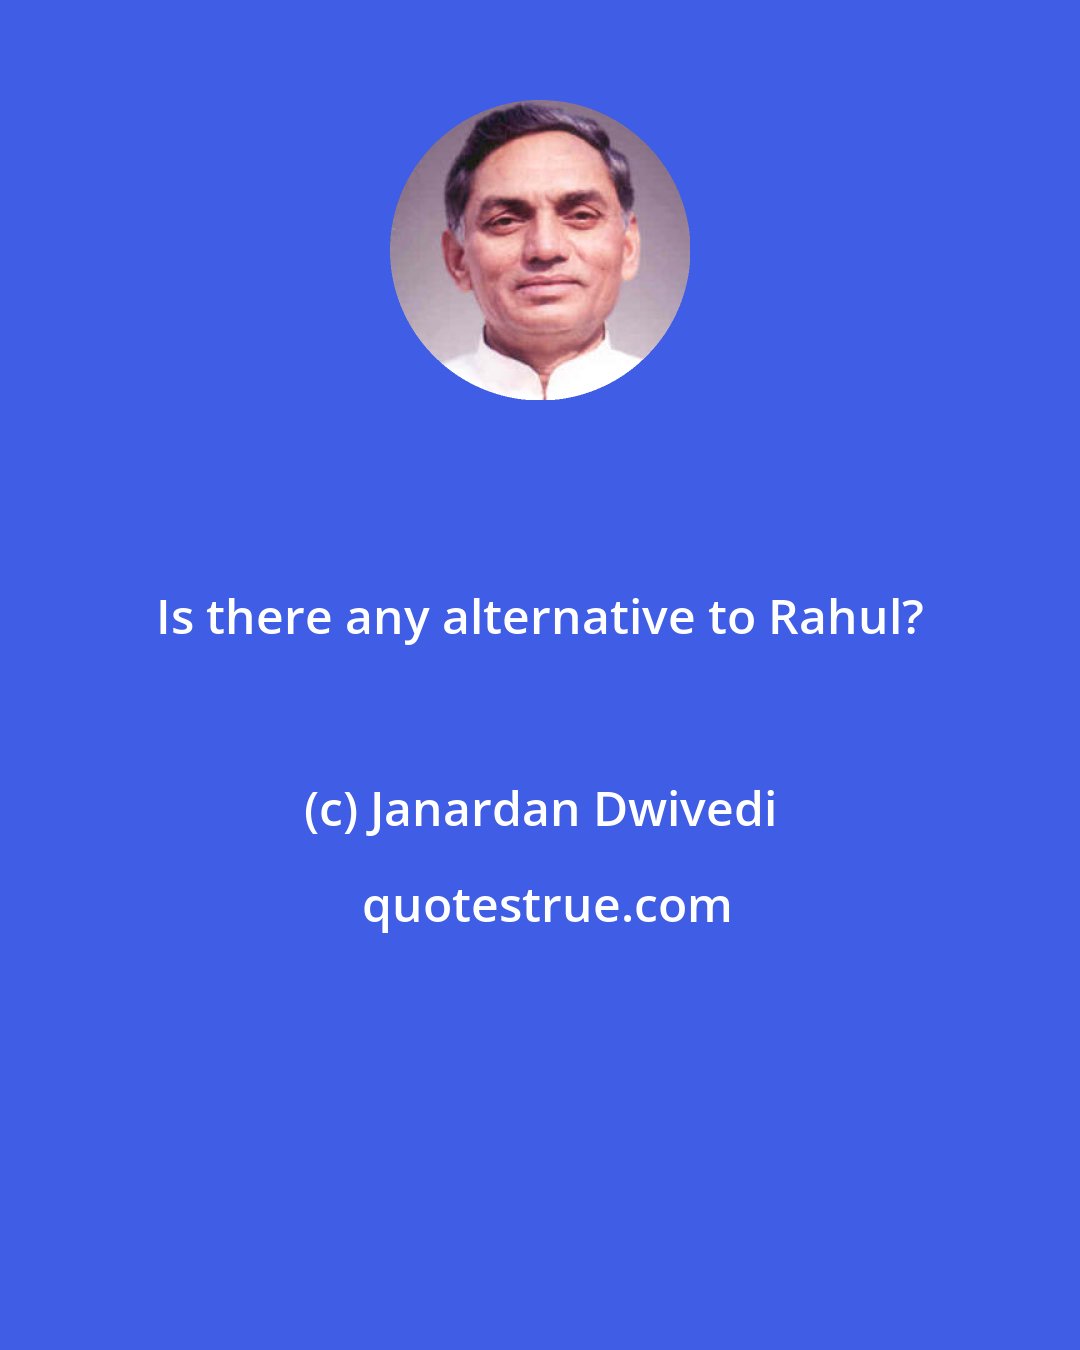 Janardan Dwivedi: Is there any alternative to Rahul?